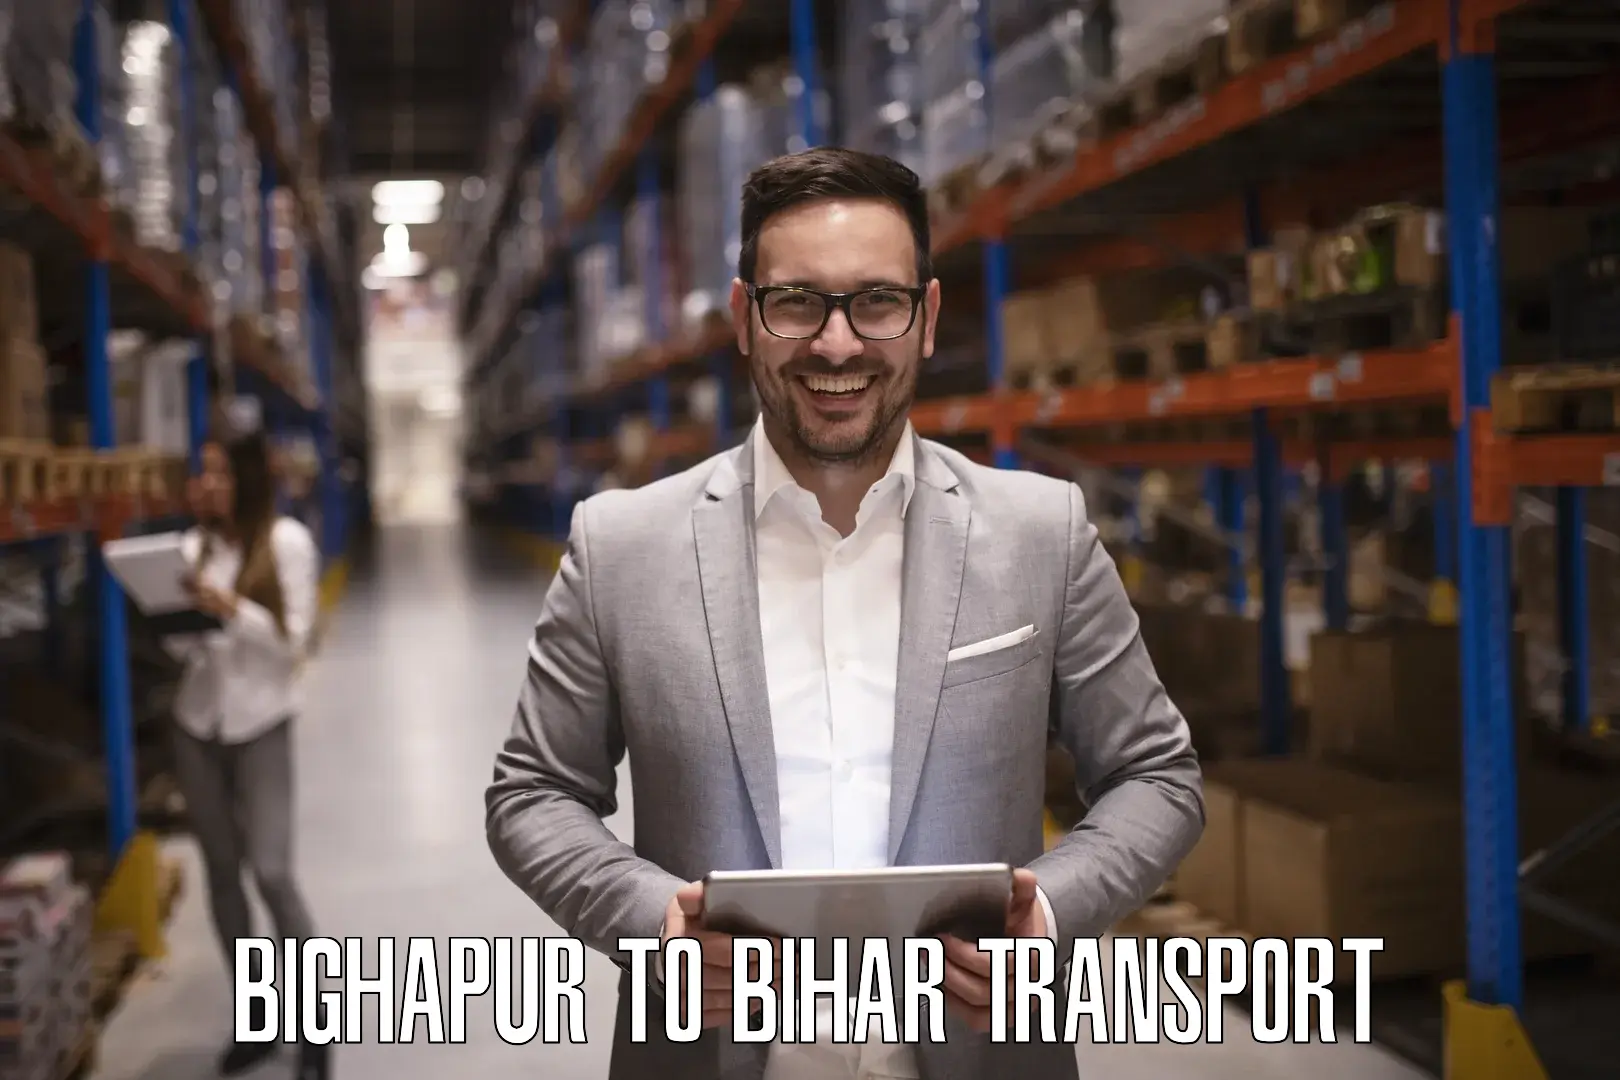 Pick up transport service Bighapur to Aurangabad Bihar